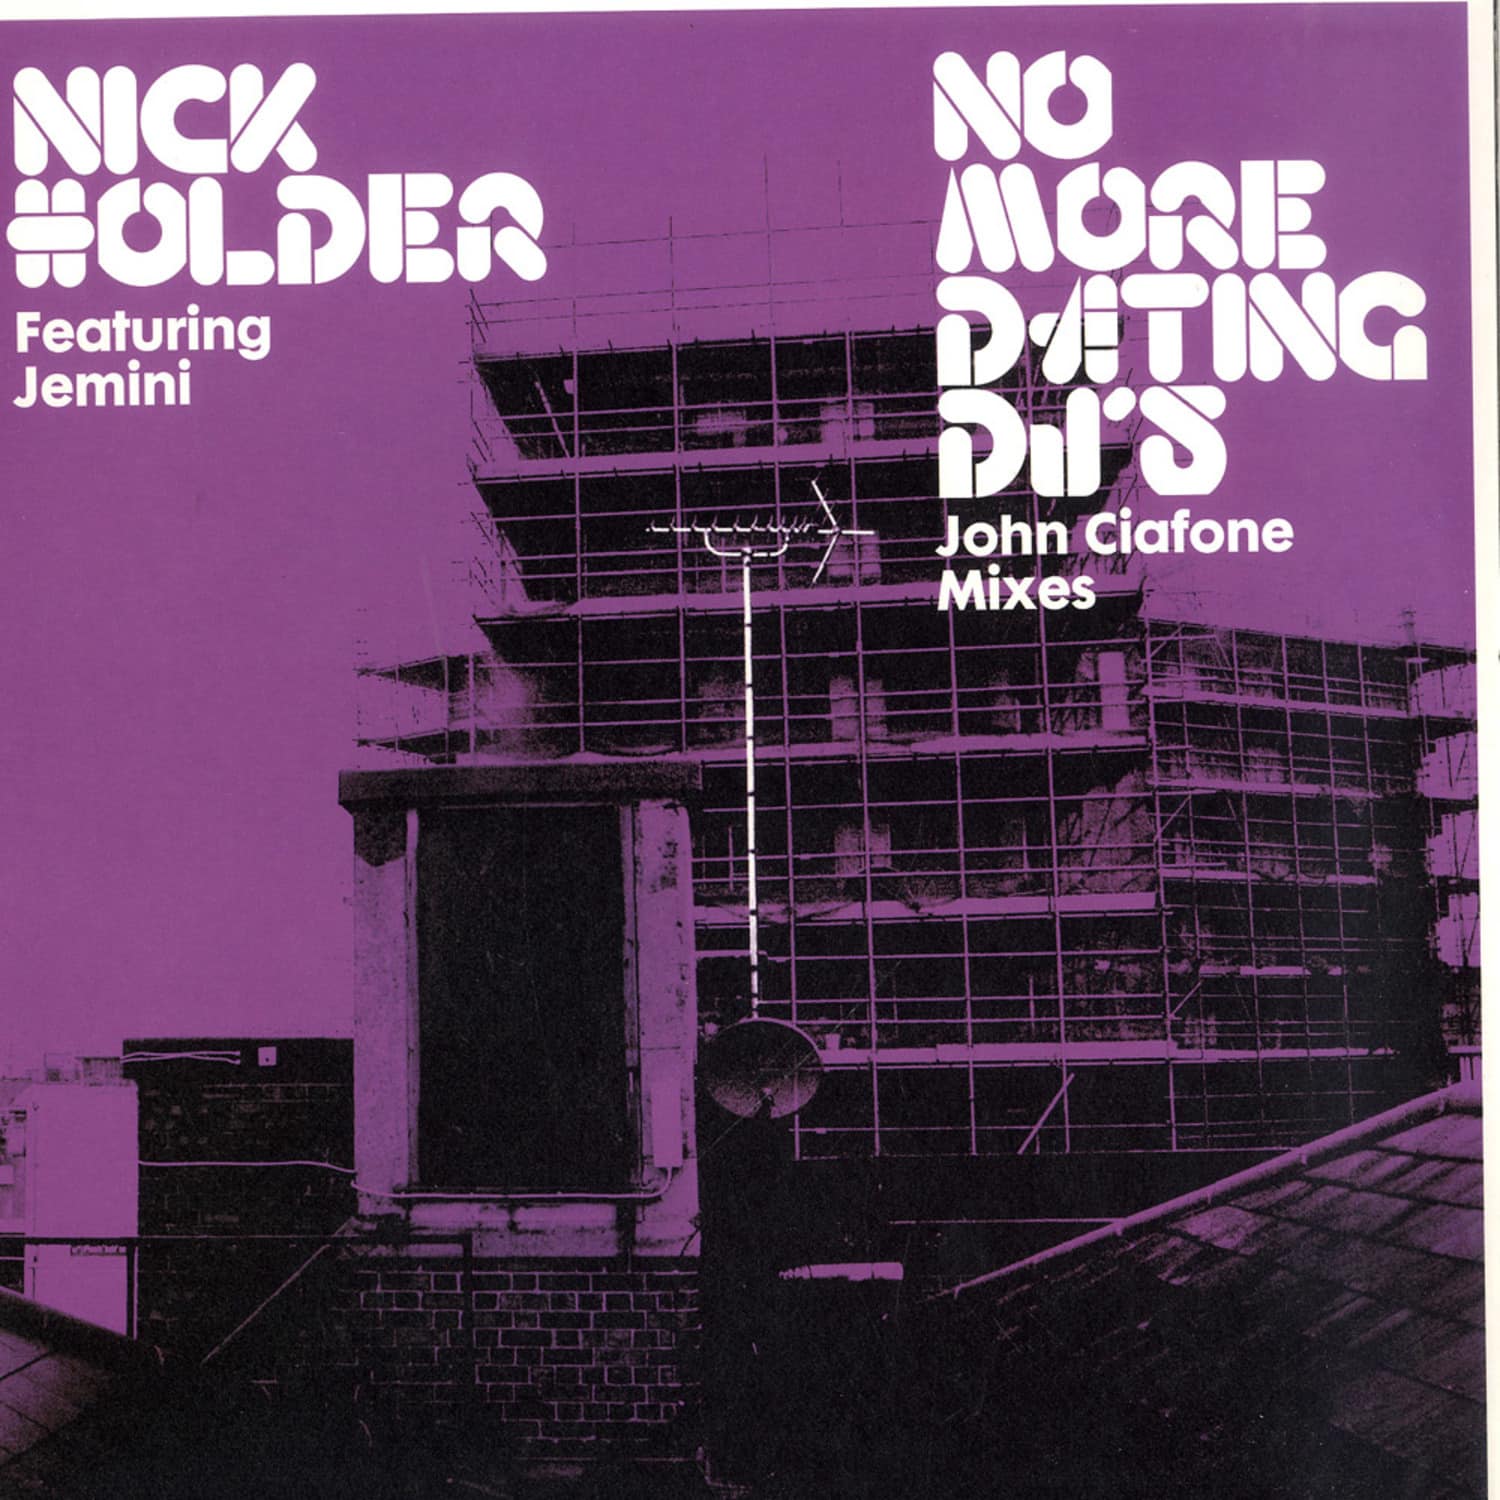 Nick Holder feat. Jemini - NO MORE DATING DJS - JOHN CIAFONE MIXES